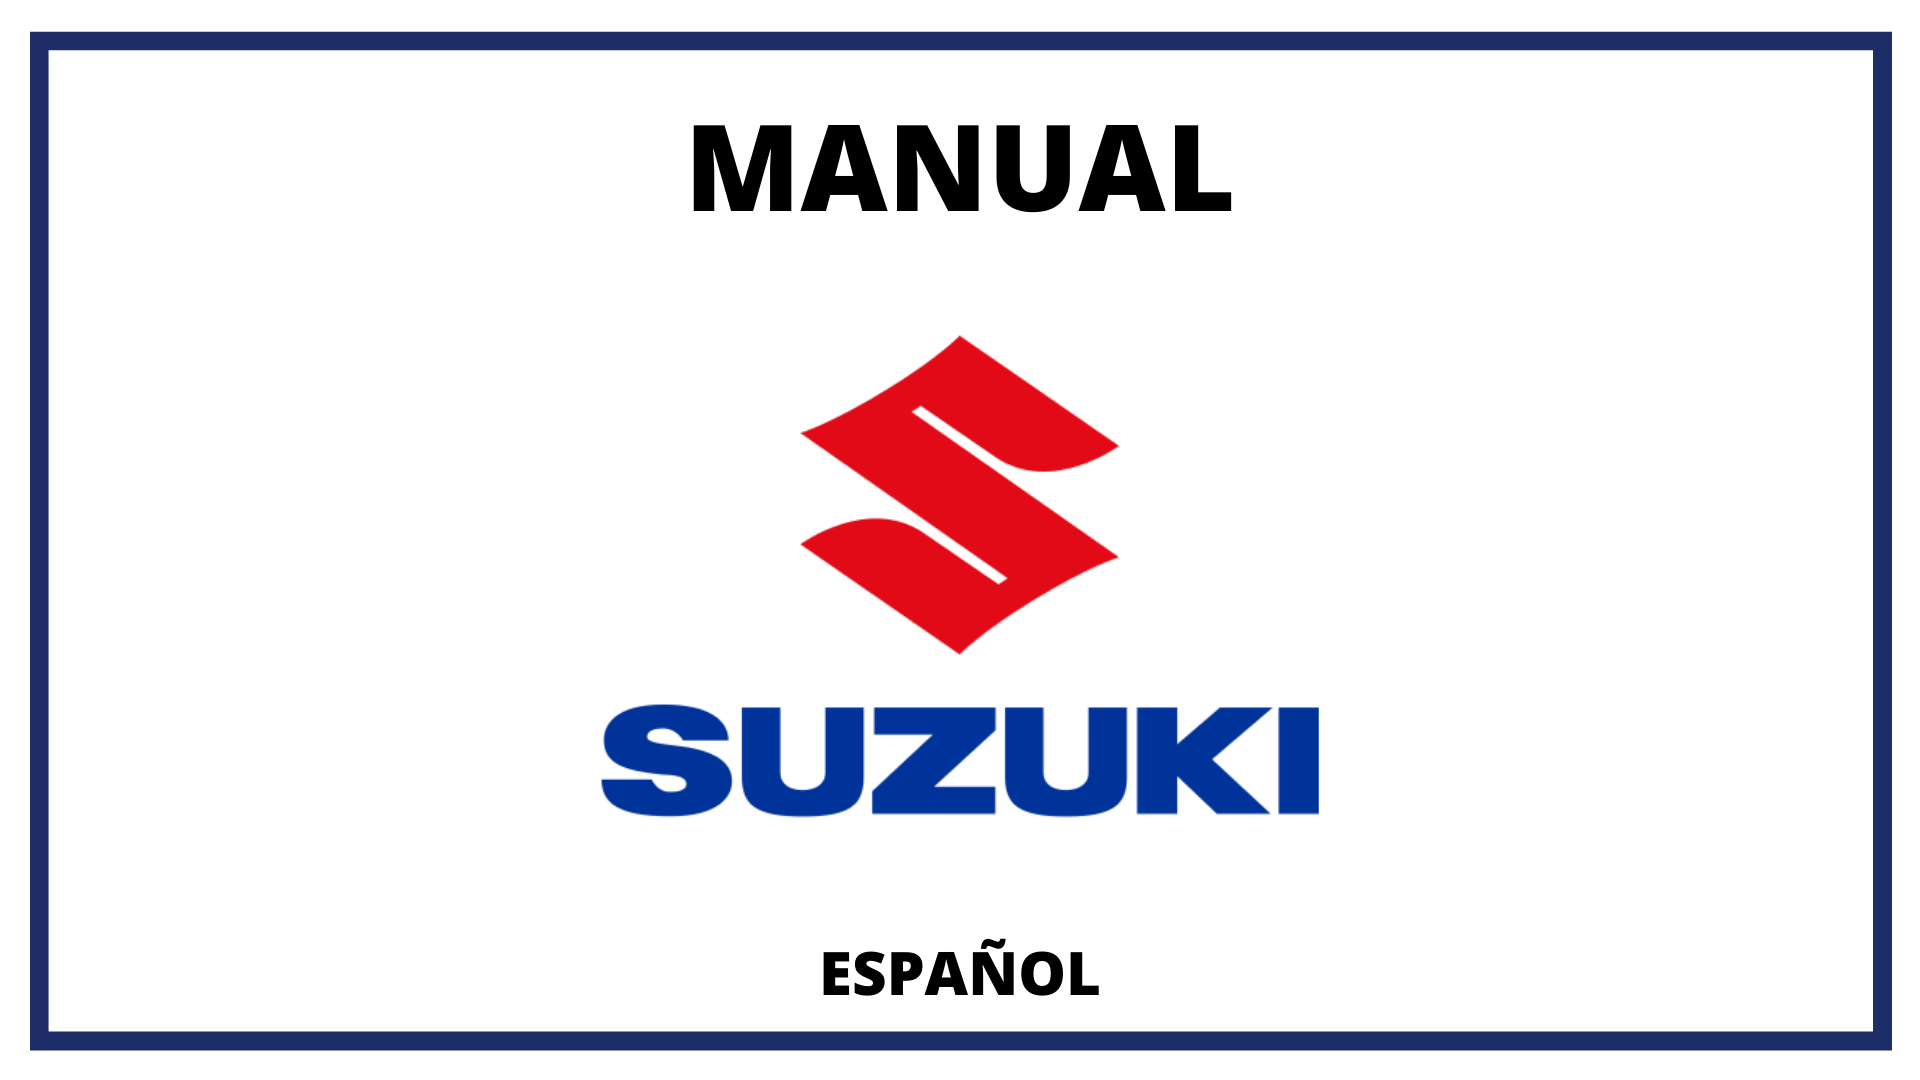 20012007 Manual De Taller Suzuki Aerio Español 